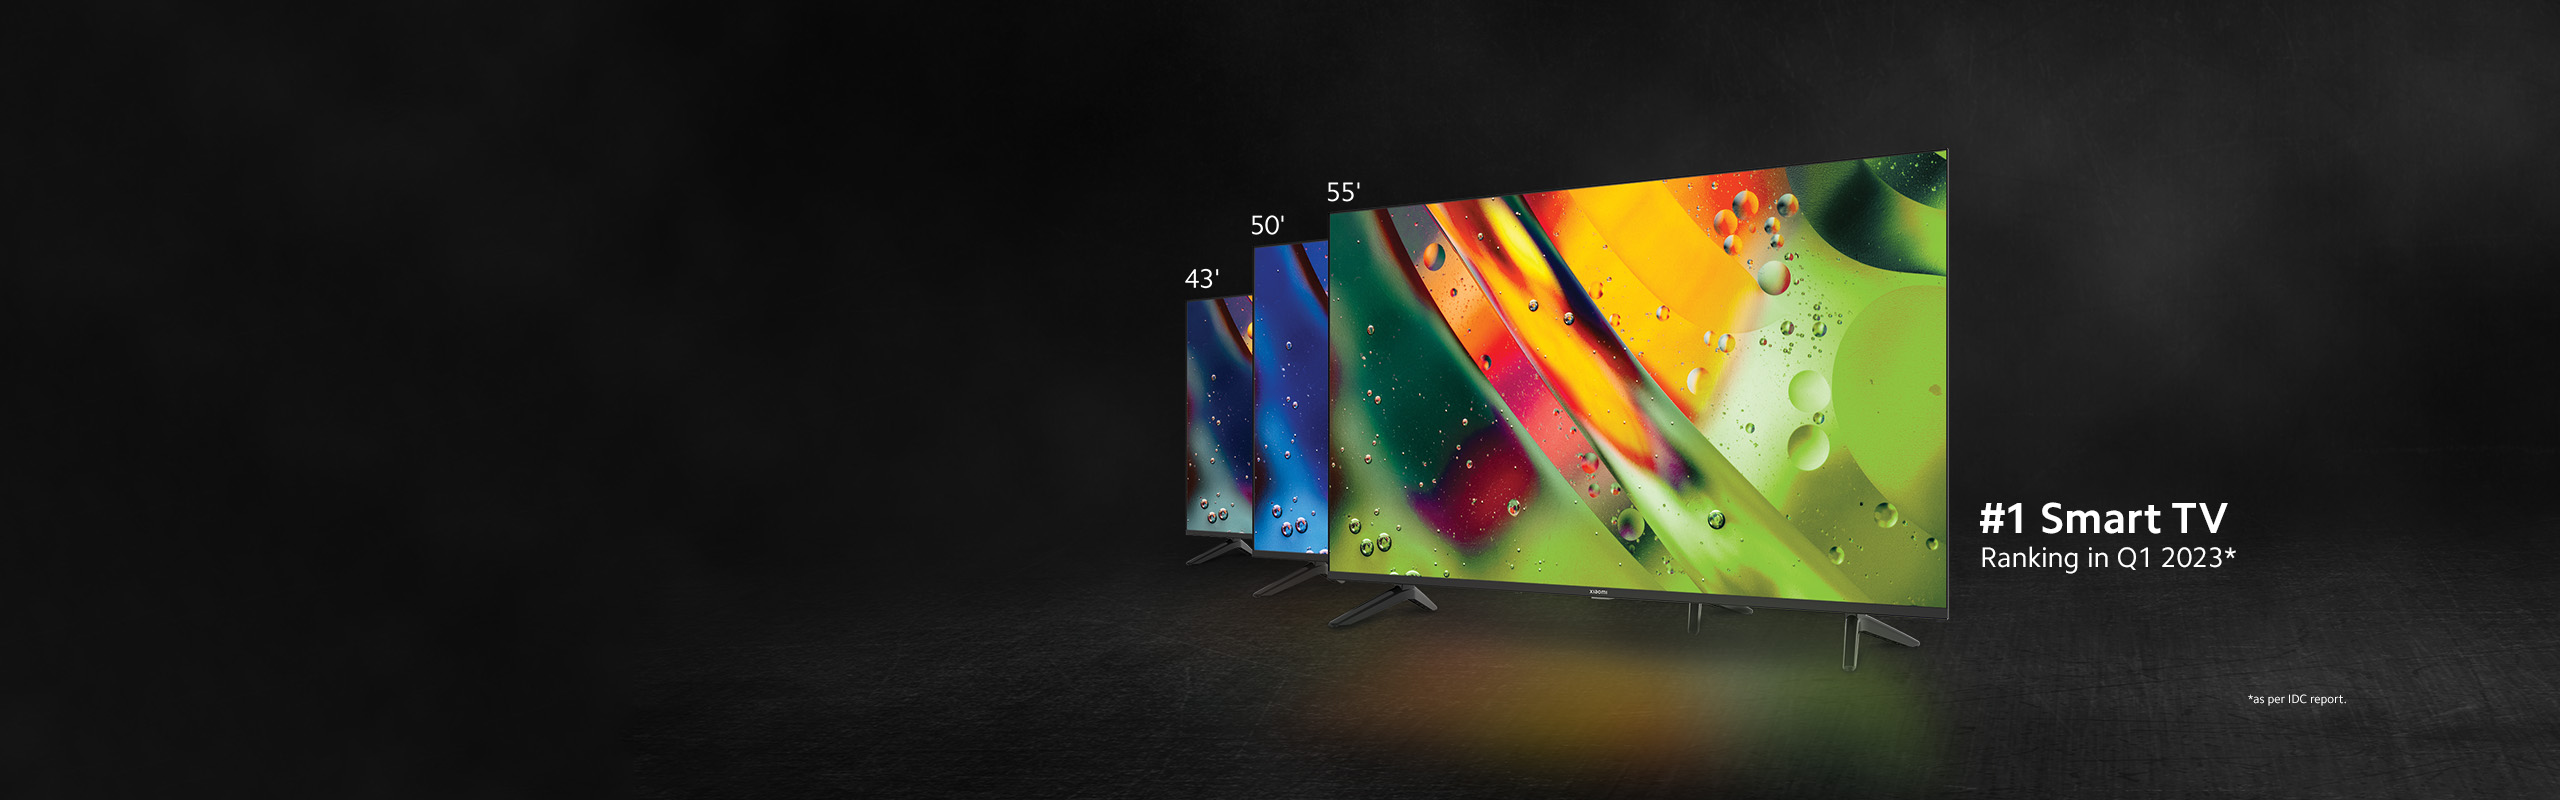 Xiaomi Smart TV X43 (108 cm)